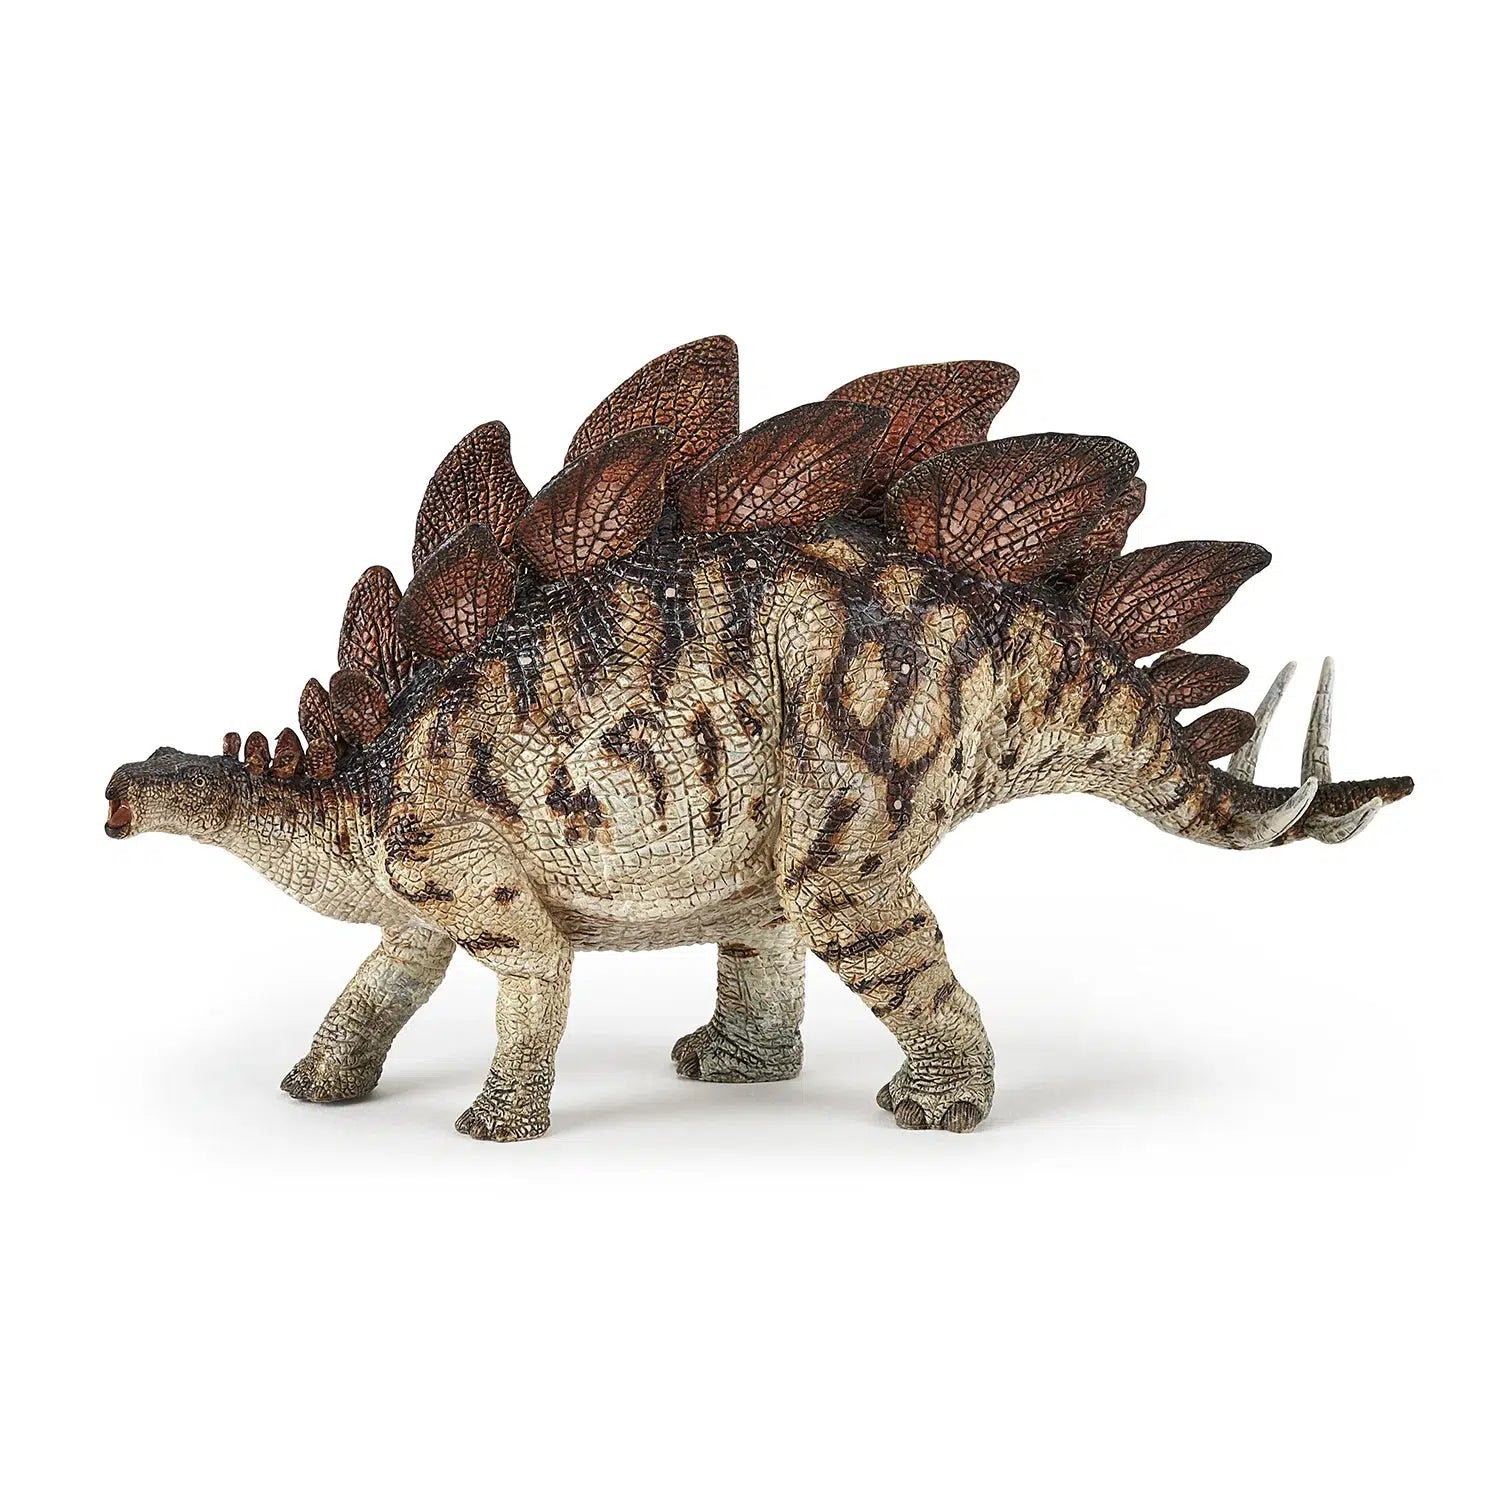 Side view of the Stegosaurus figurine.